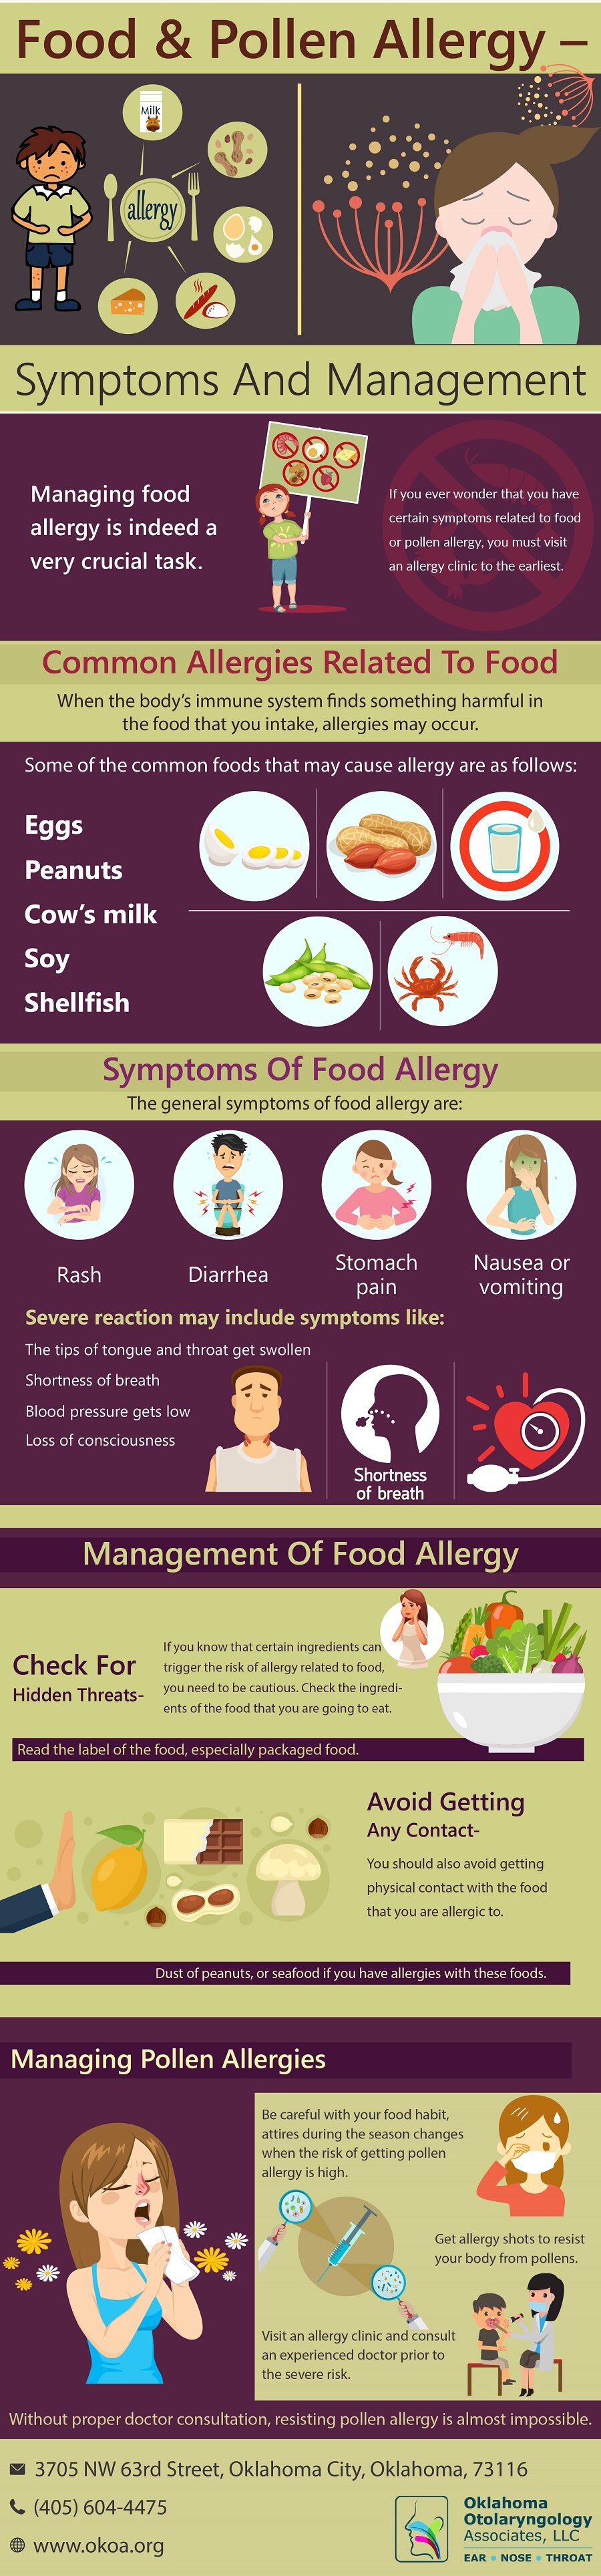 Food & Pollen Allergy - Symptoms & Management